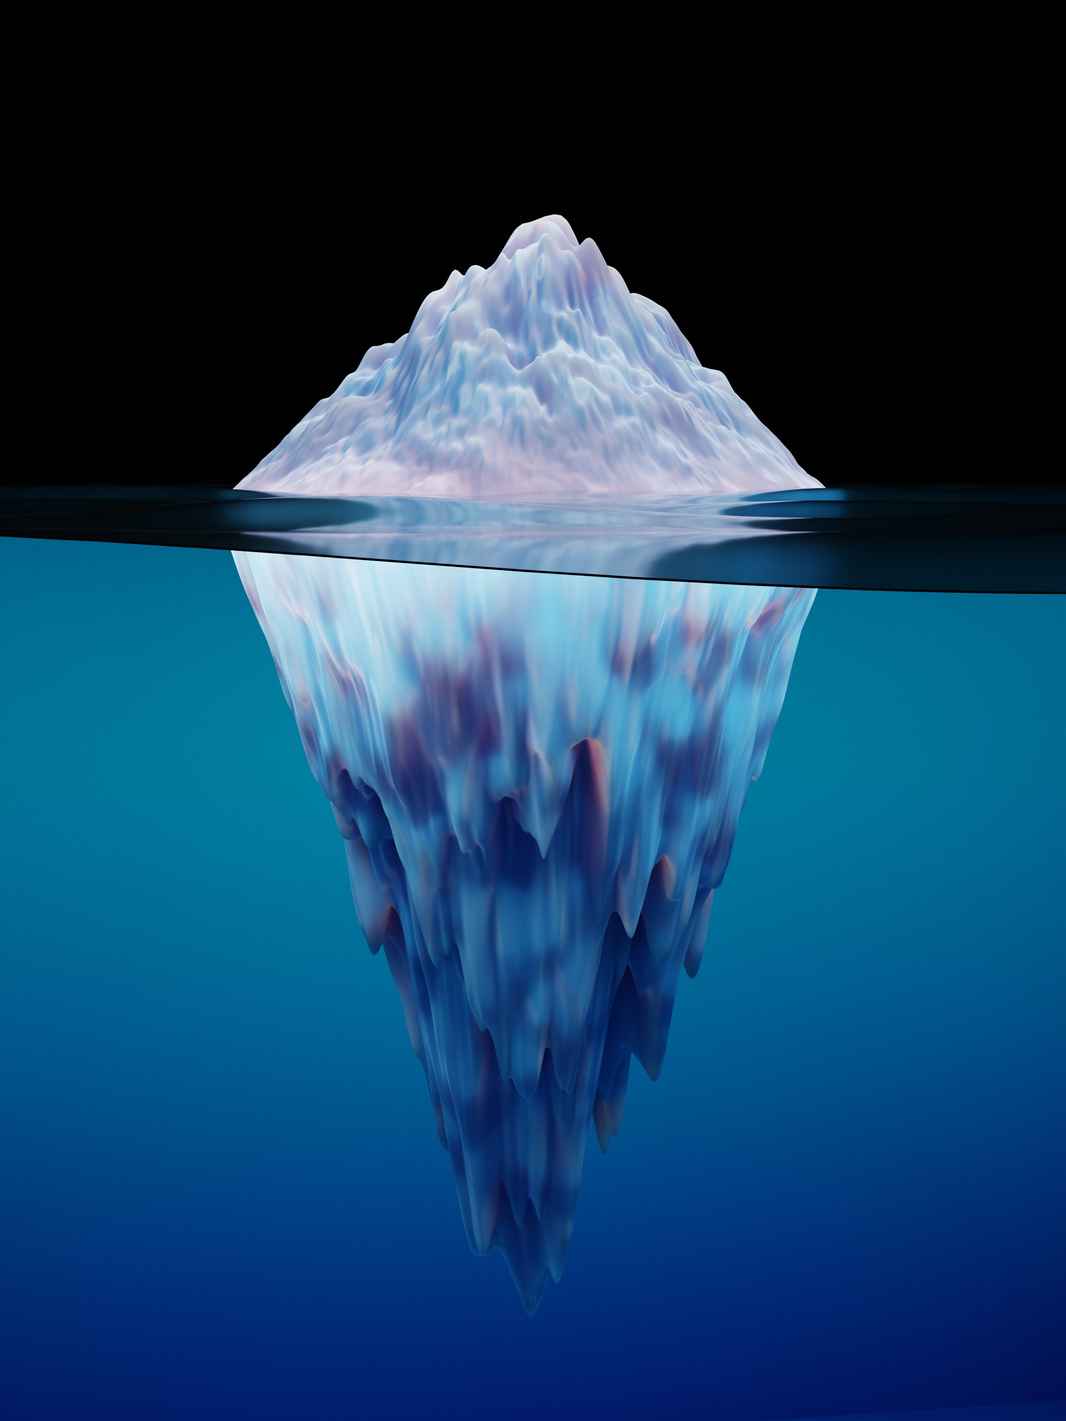 Isbjerg det ubevidste sind